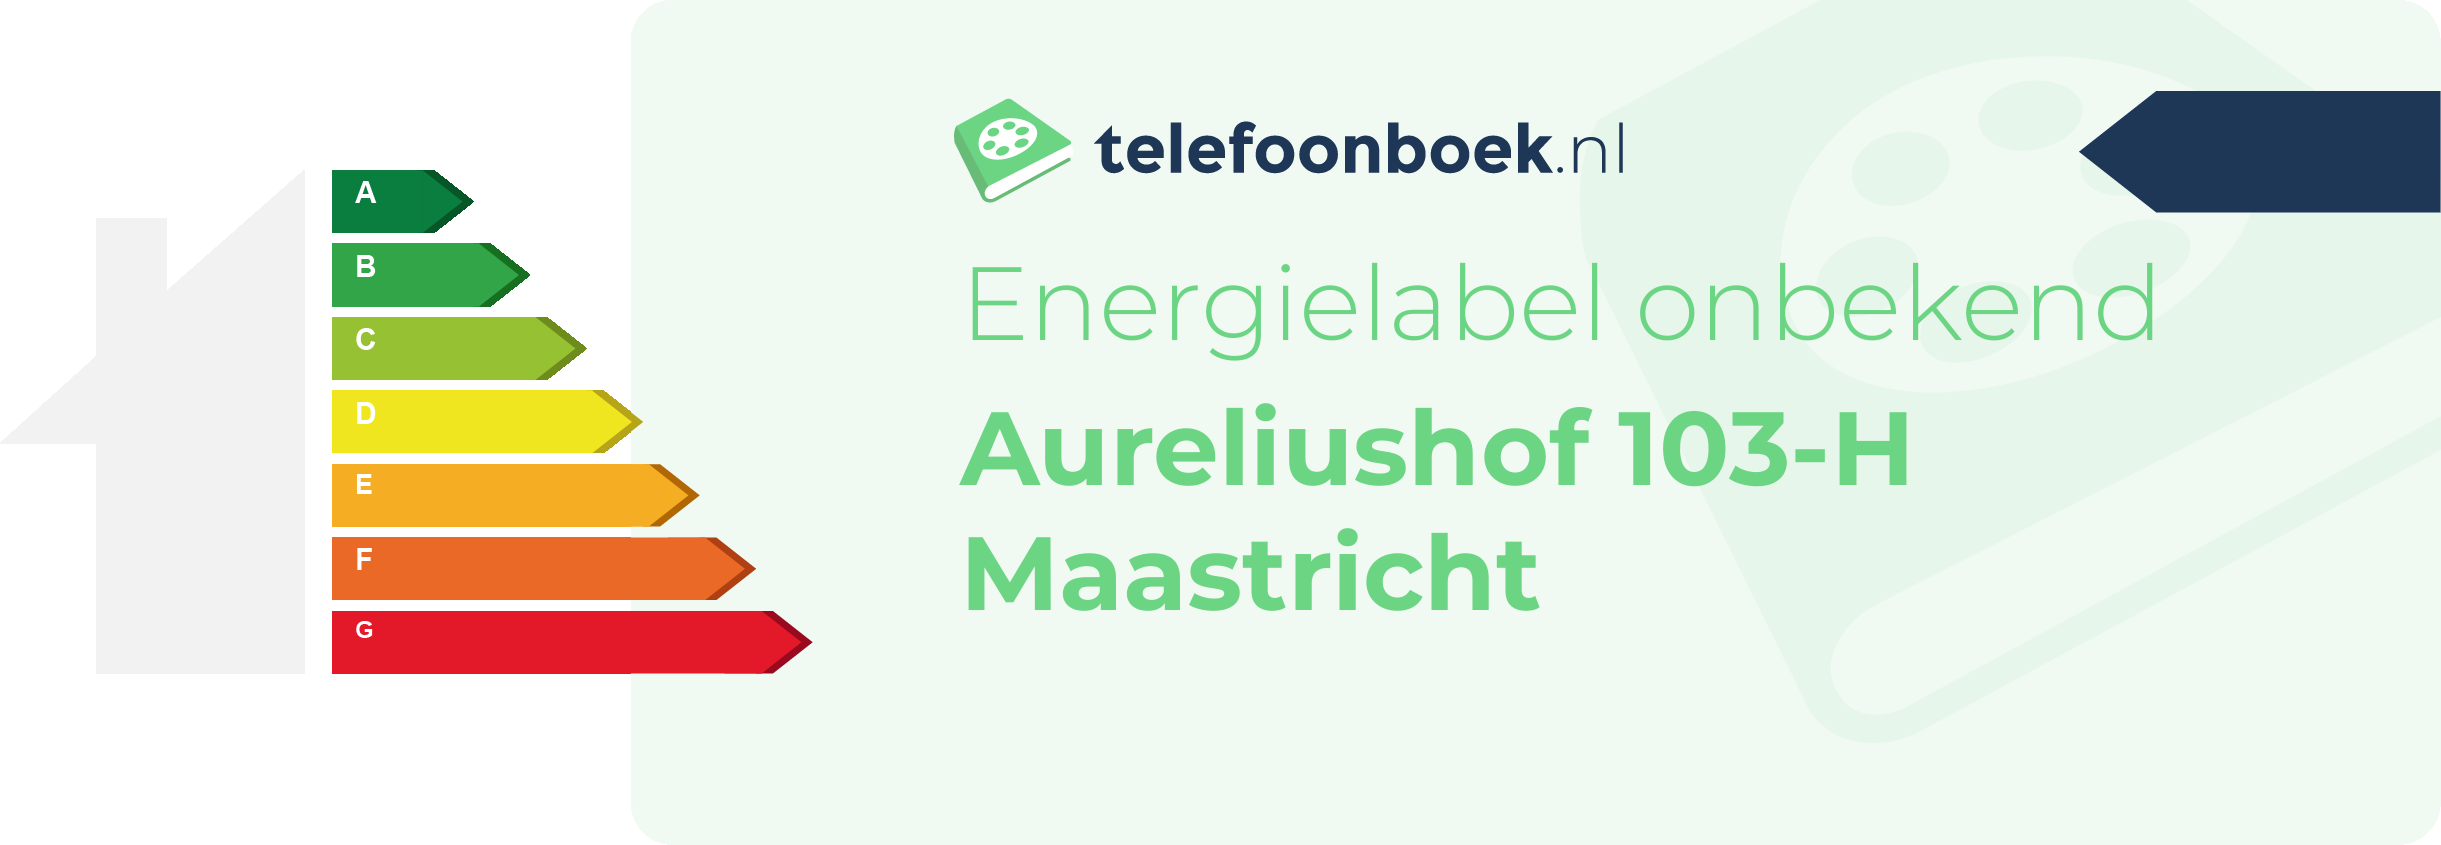 Energielabel Aureliushof 103-H Maastricht